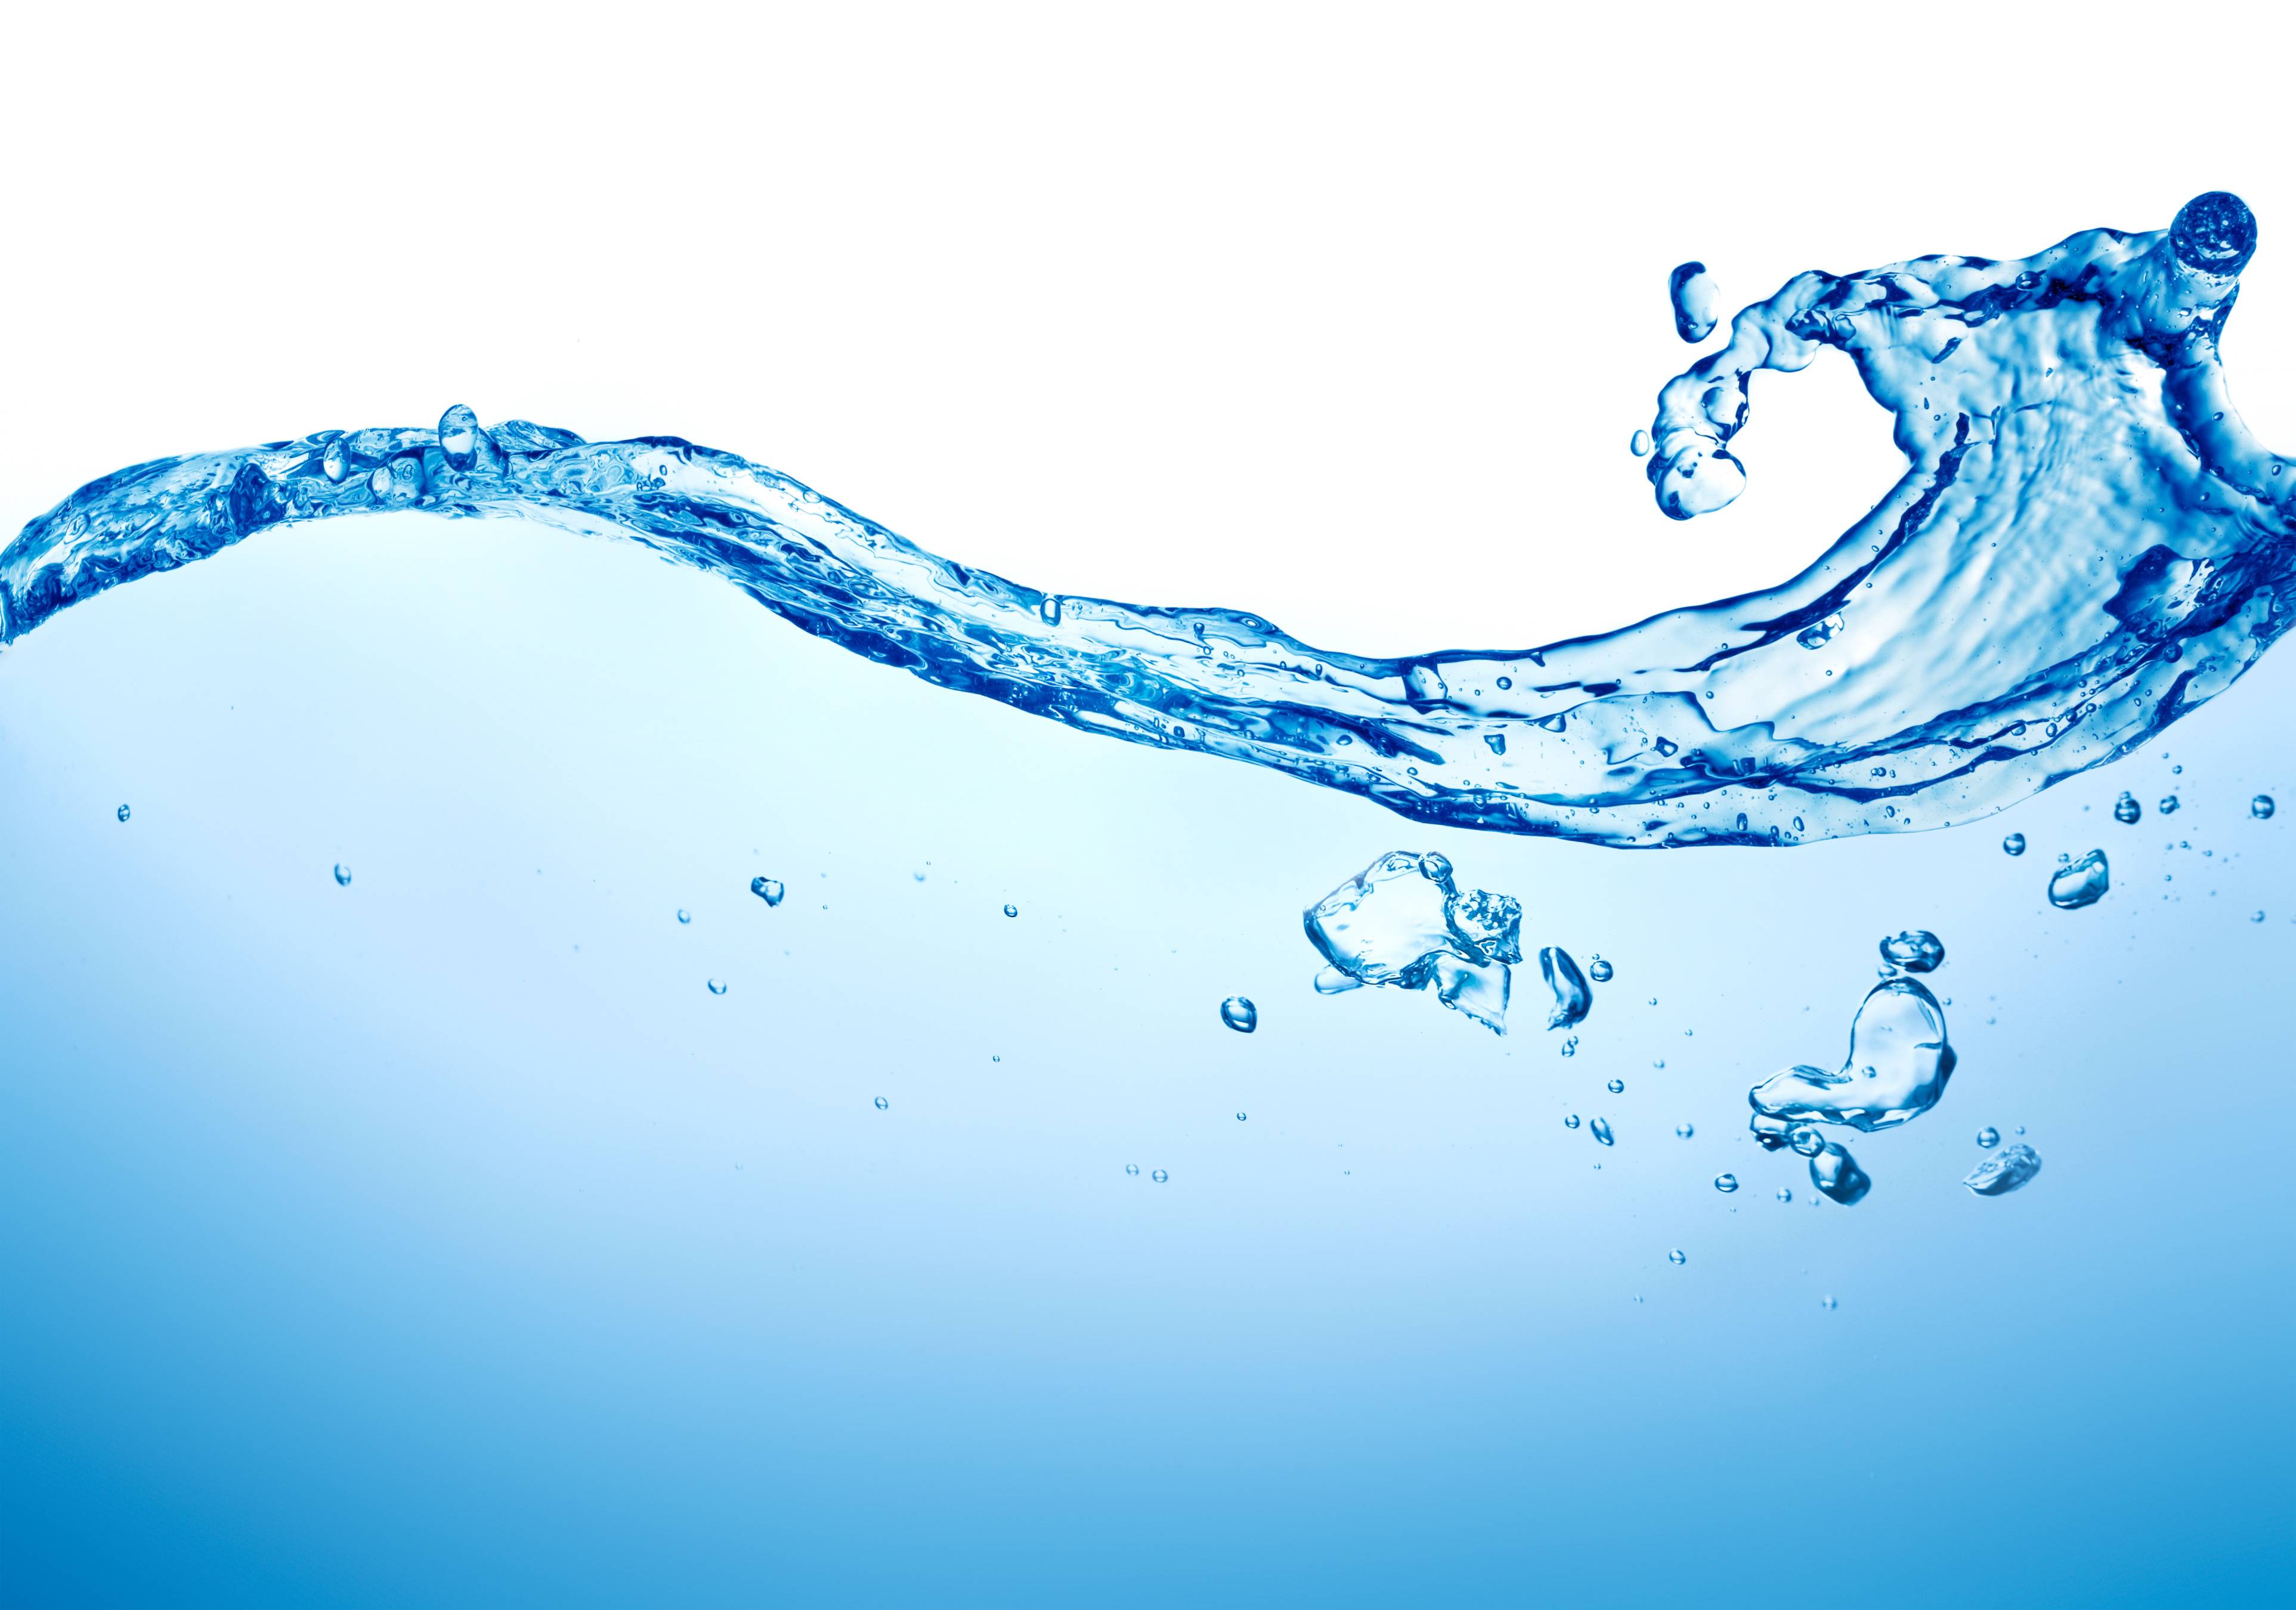 WSSTP Water Innovation Award goes to Akvola Technologies